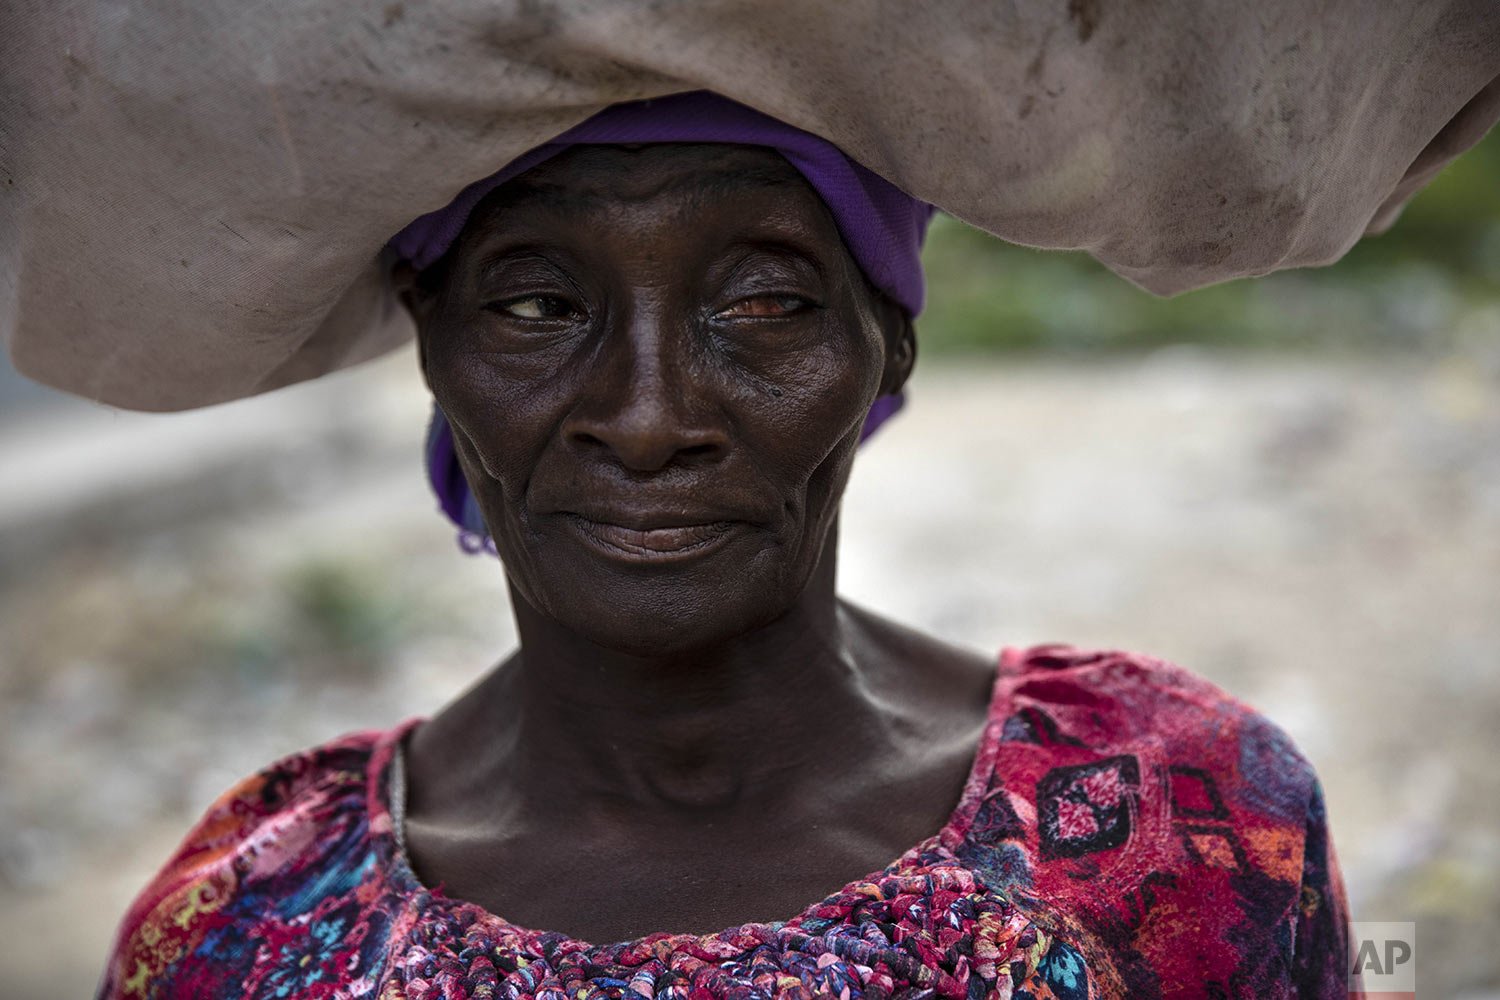  Adriana, 50, poses for the photo while walking in the Bel- Air neighborhood of Port-au-Prince, Haiti, Oct. 5, 2021. (AP Photo/Rodrigo Abd) 